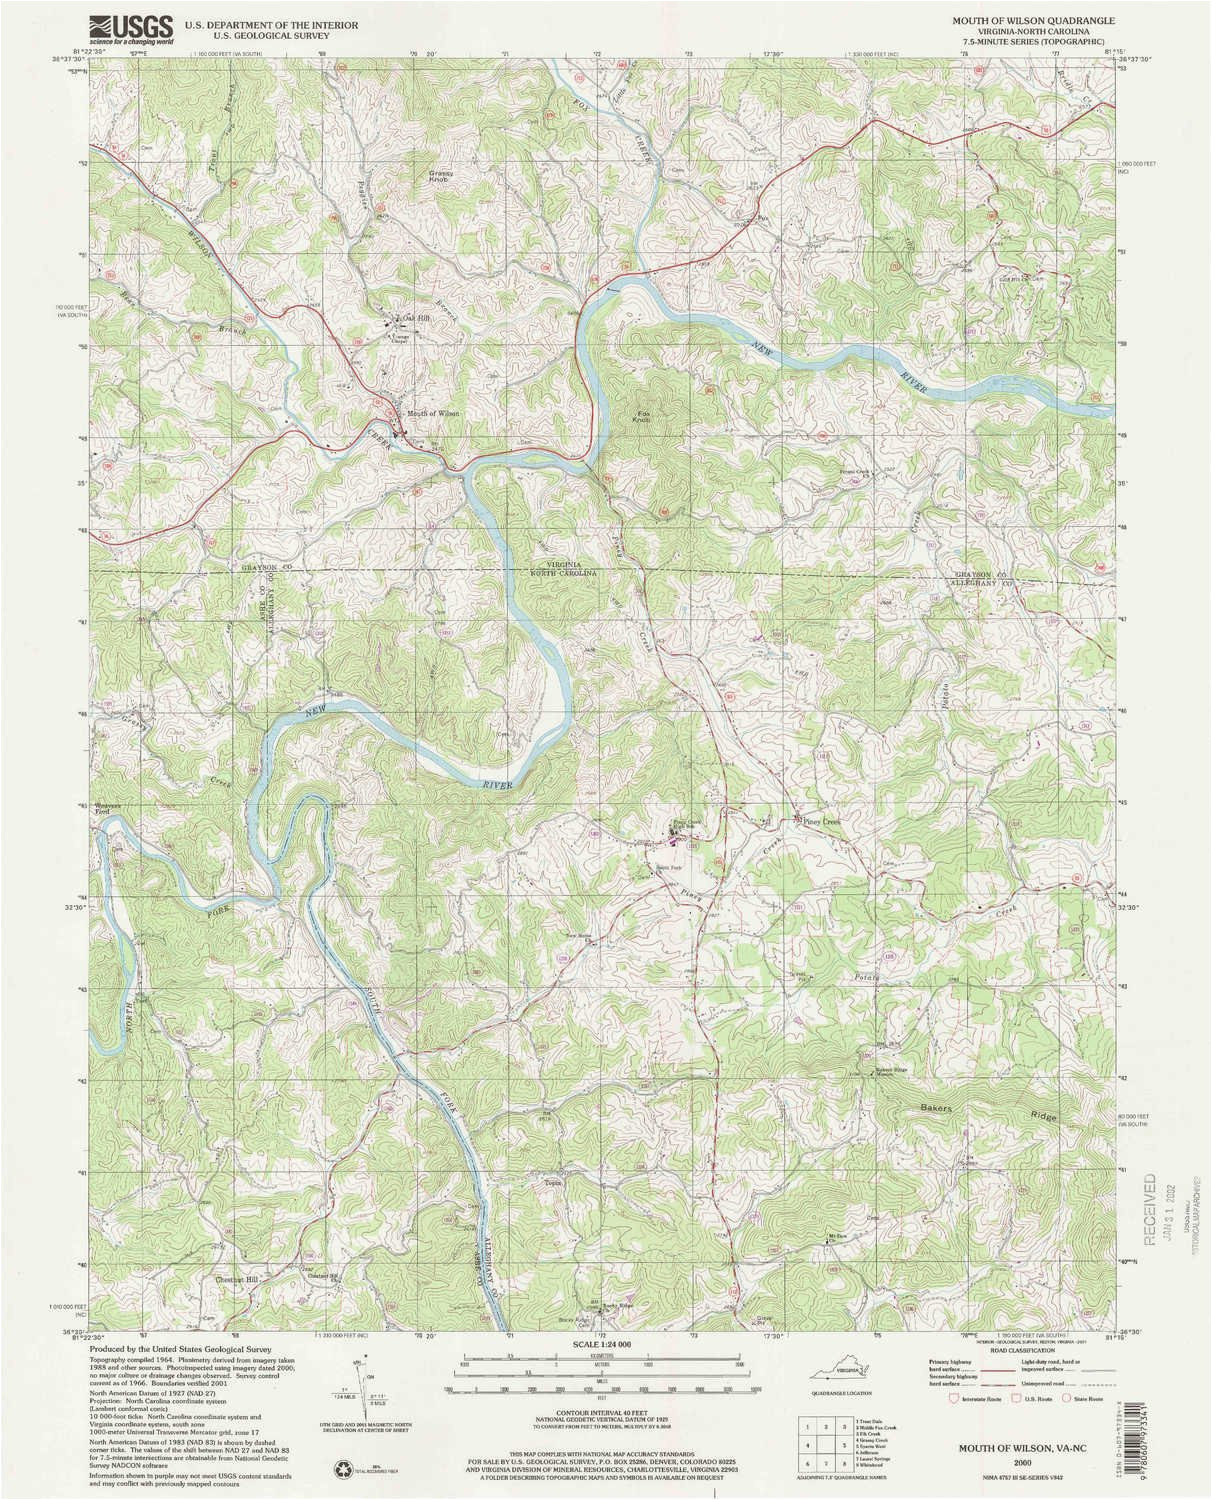 Colorado topo Maps Free Amazon Com Yellowmaps Mouth Of Wilson Va topo Map 1 24000 Scale